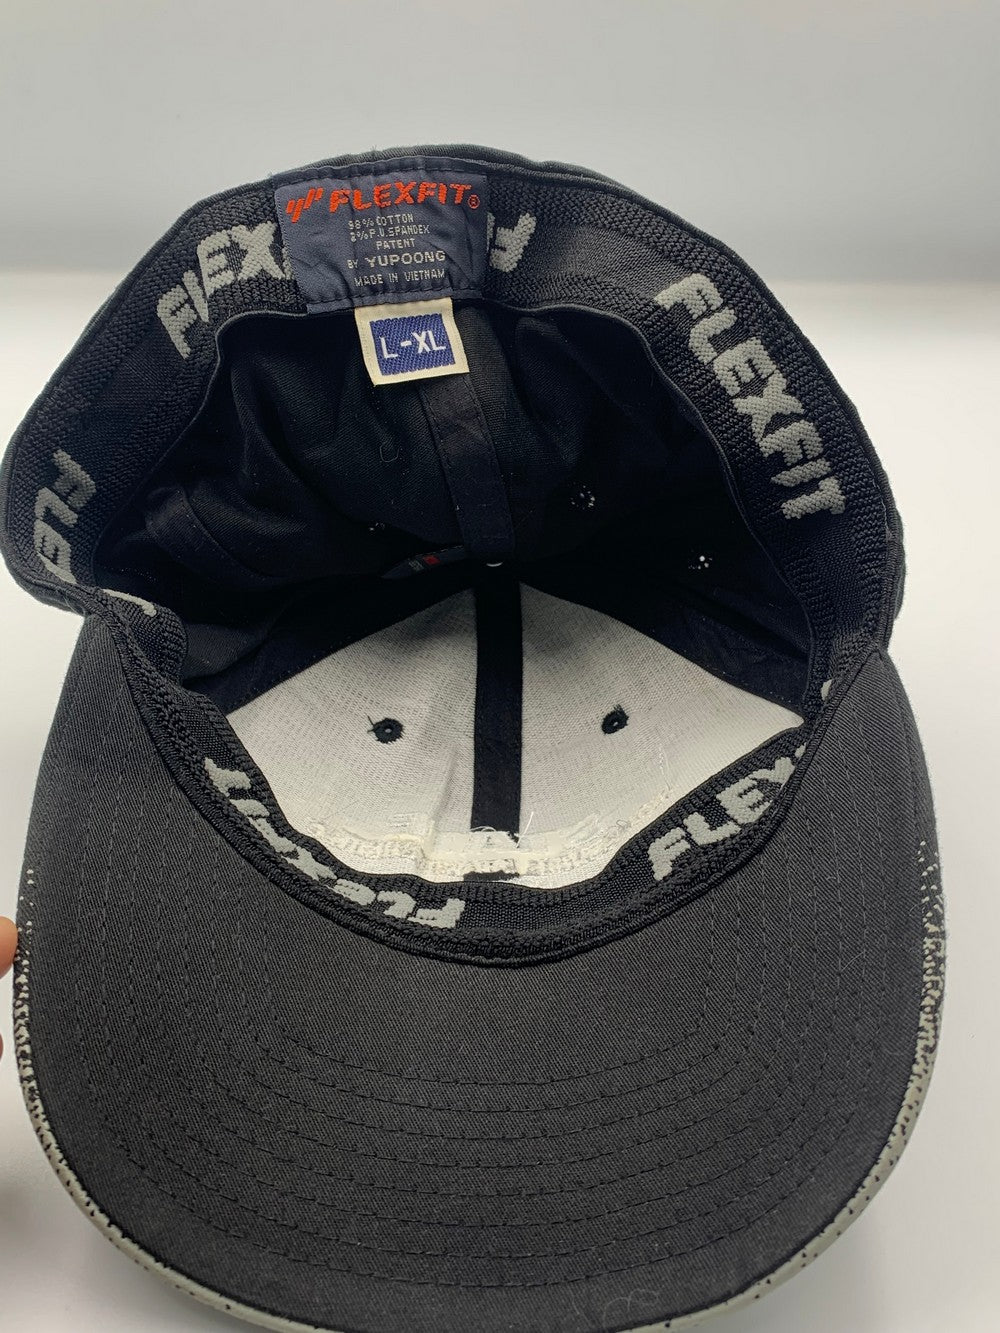 FLEXFIT Branded Original Branded Caps For Men